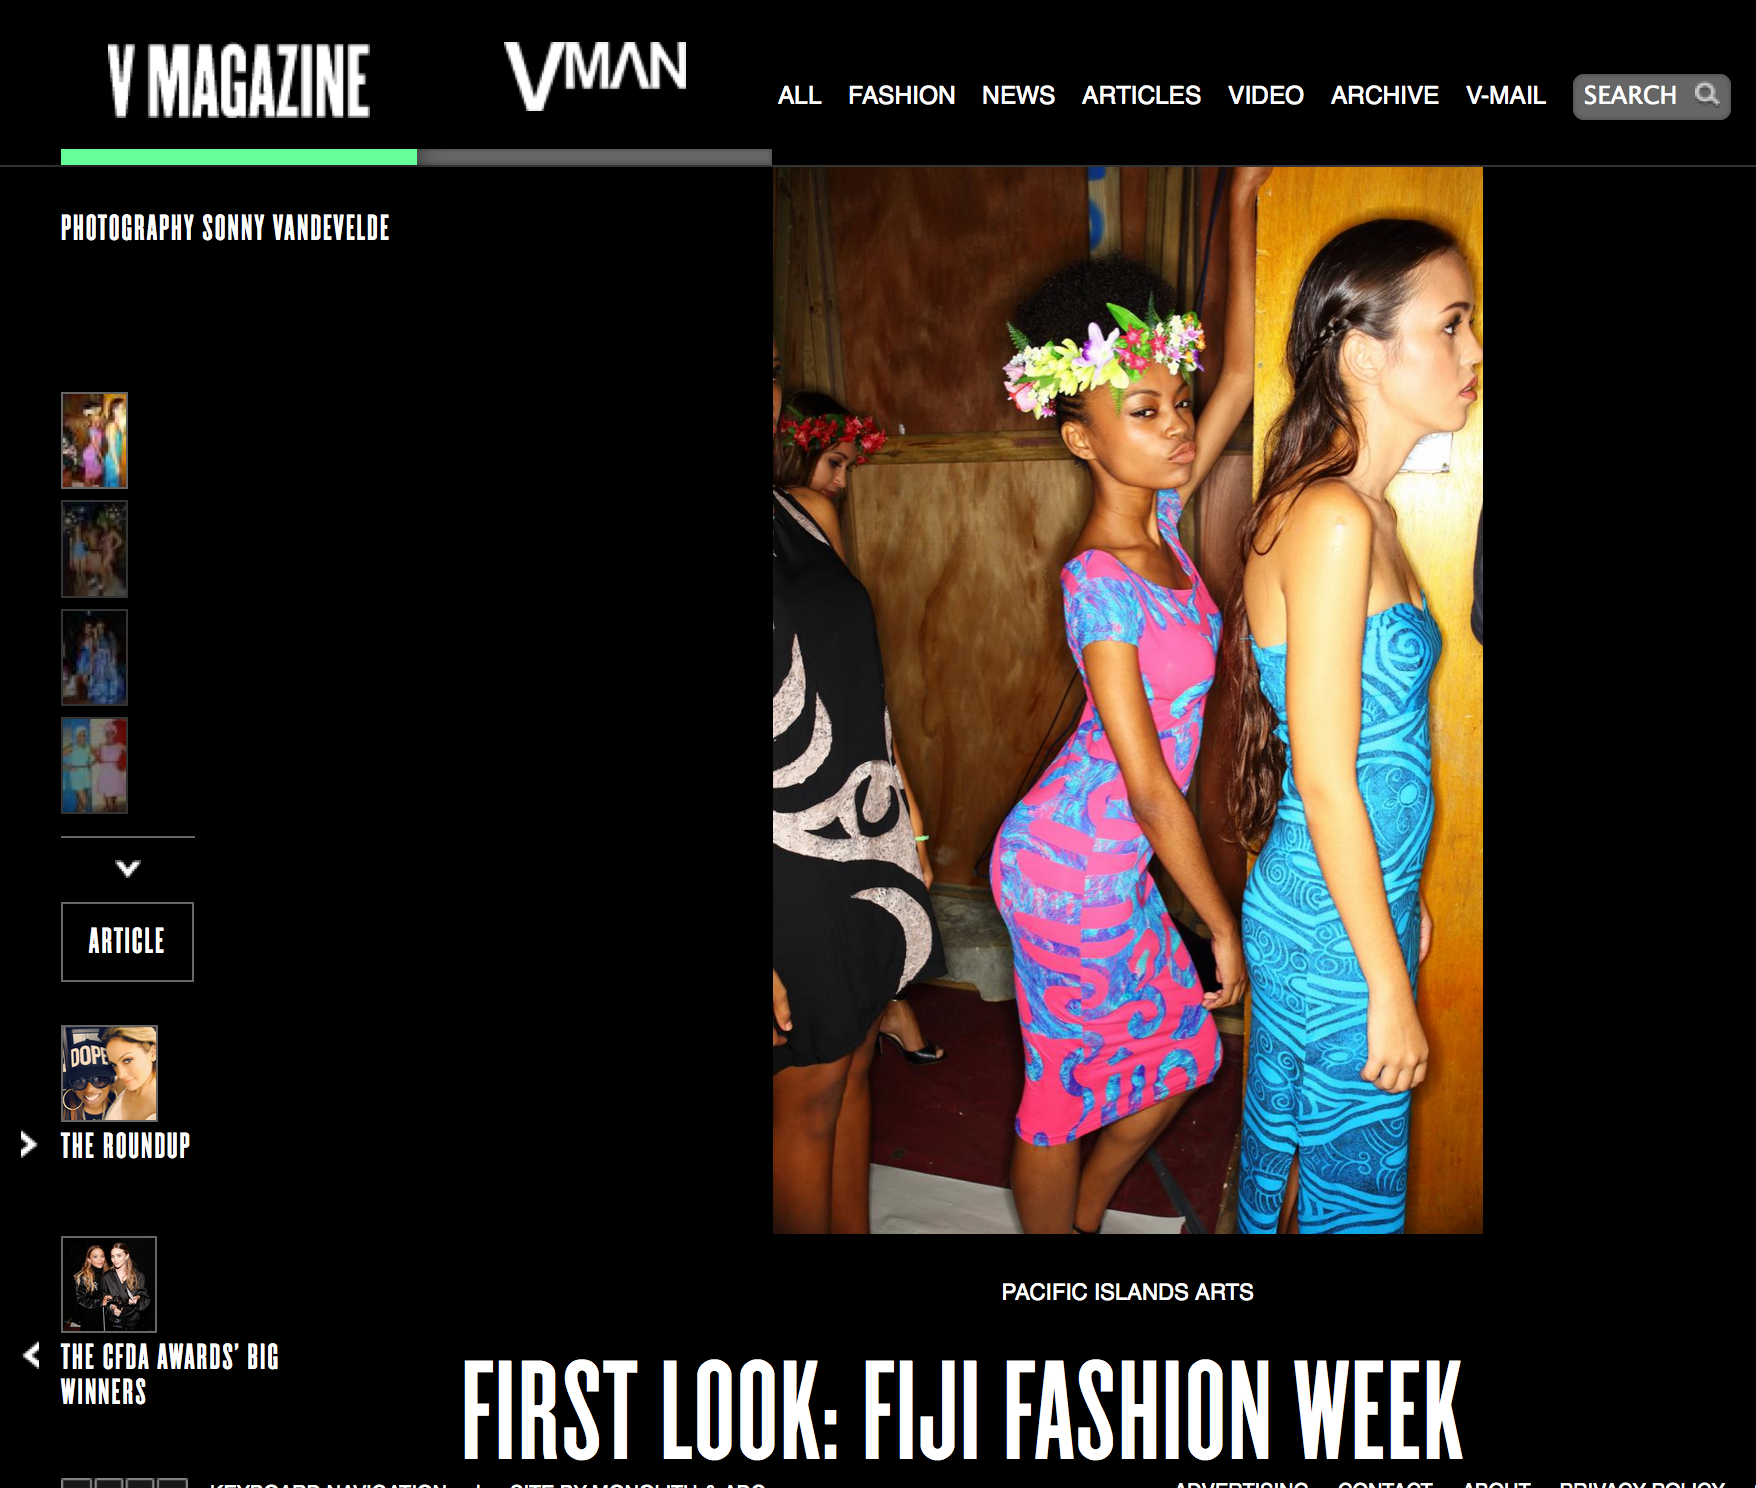 V magazine covers Fiji Fashion week